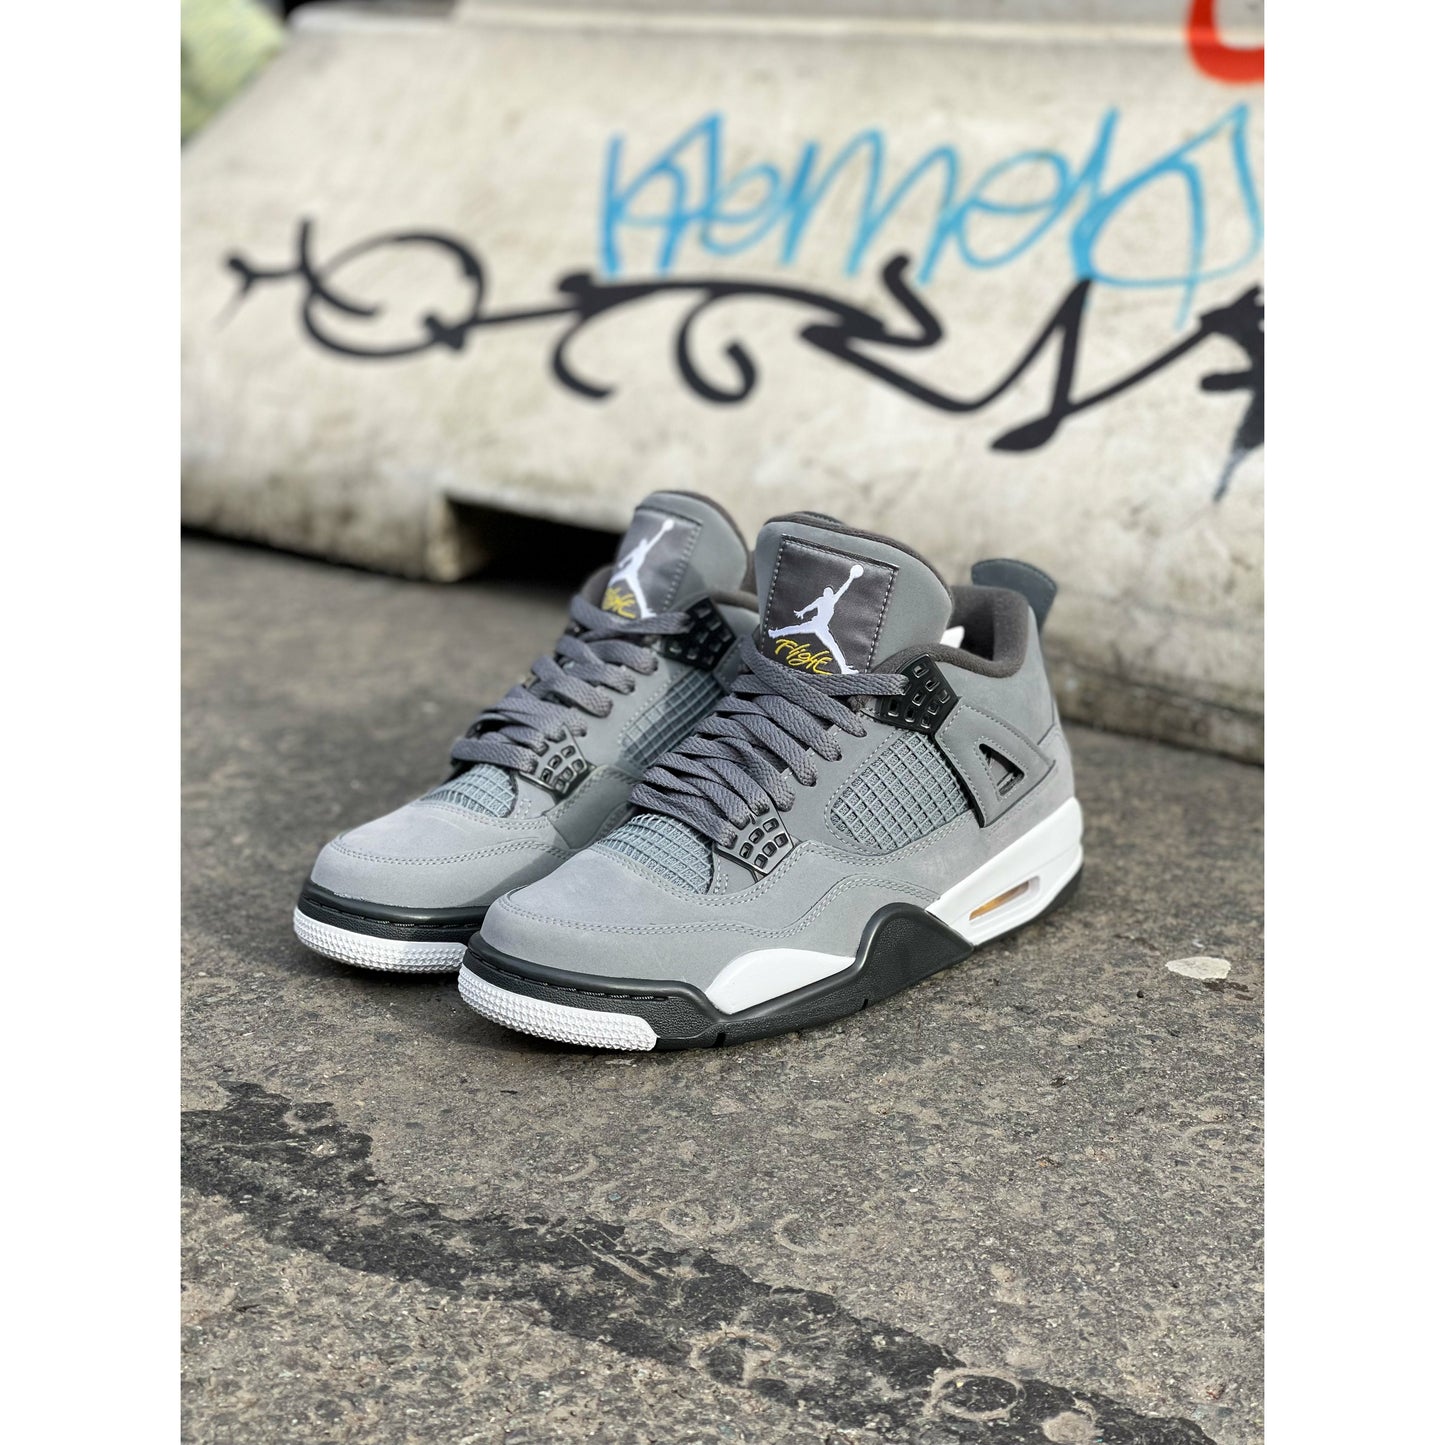 Jordan 4 Retro Cool Grey (2019) from Jordan's